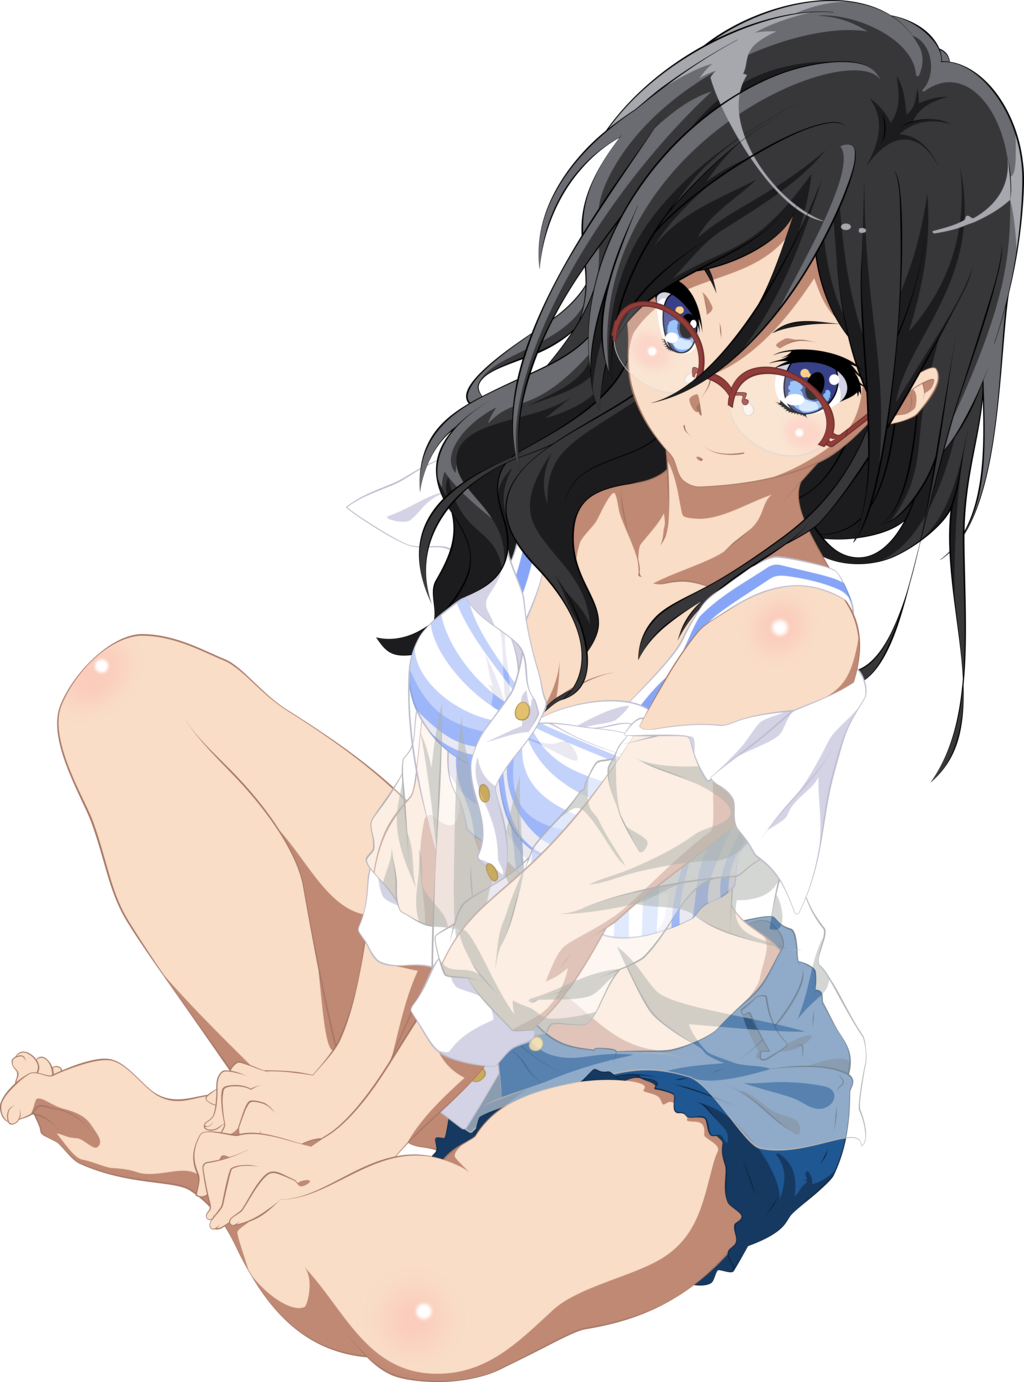 Anime 1024x1382 Tanaka Asuka Hibike! Euphonium anime girls bikini blue eyes glasses cleavage see-through clothing black hair smiling barefoot